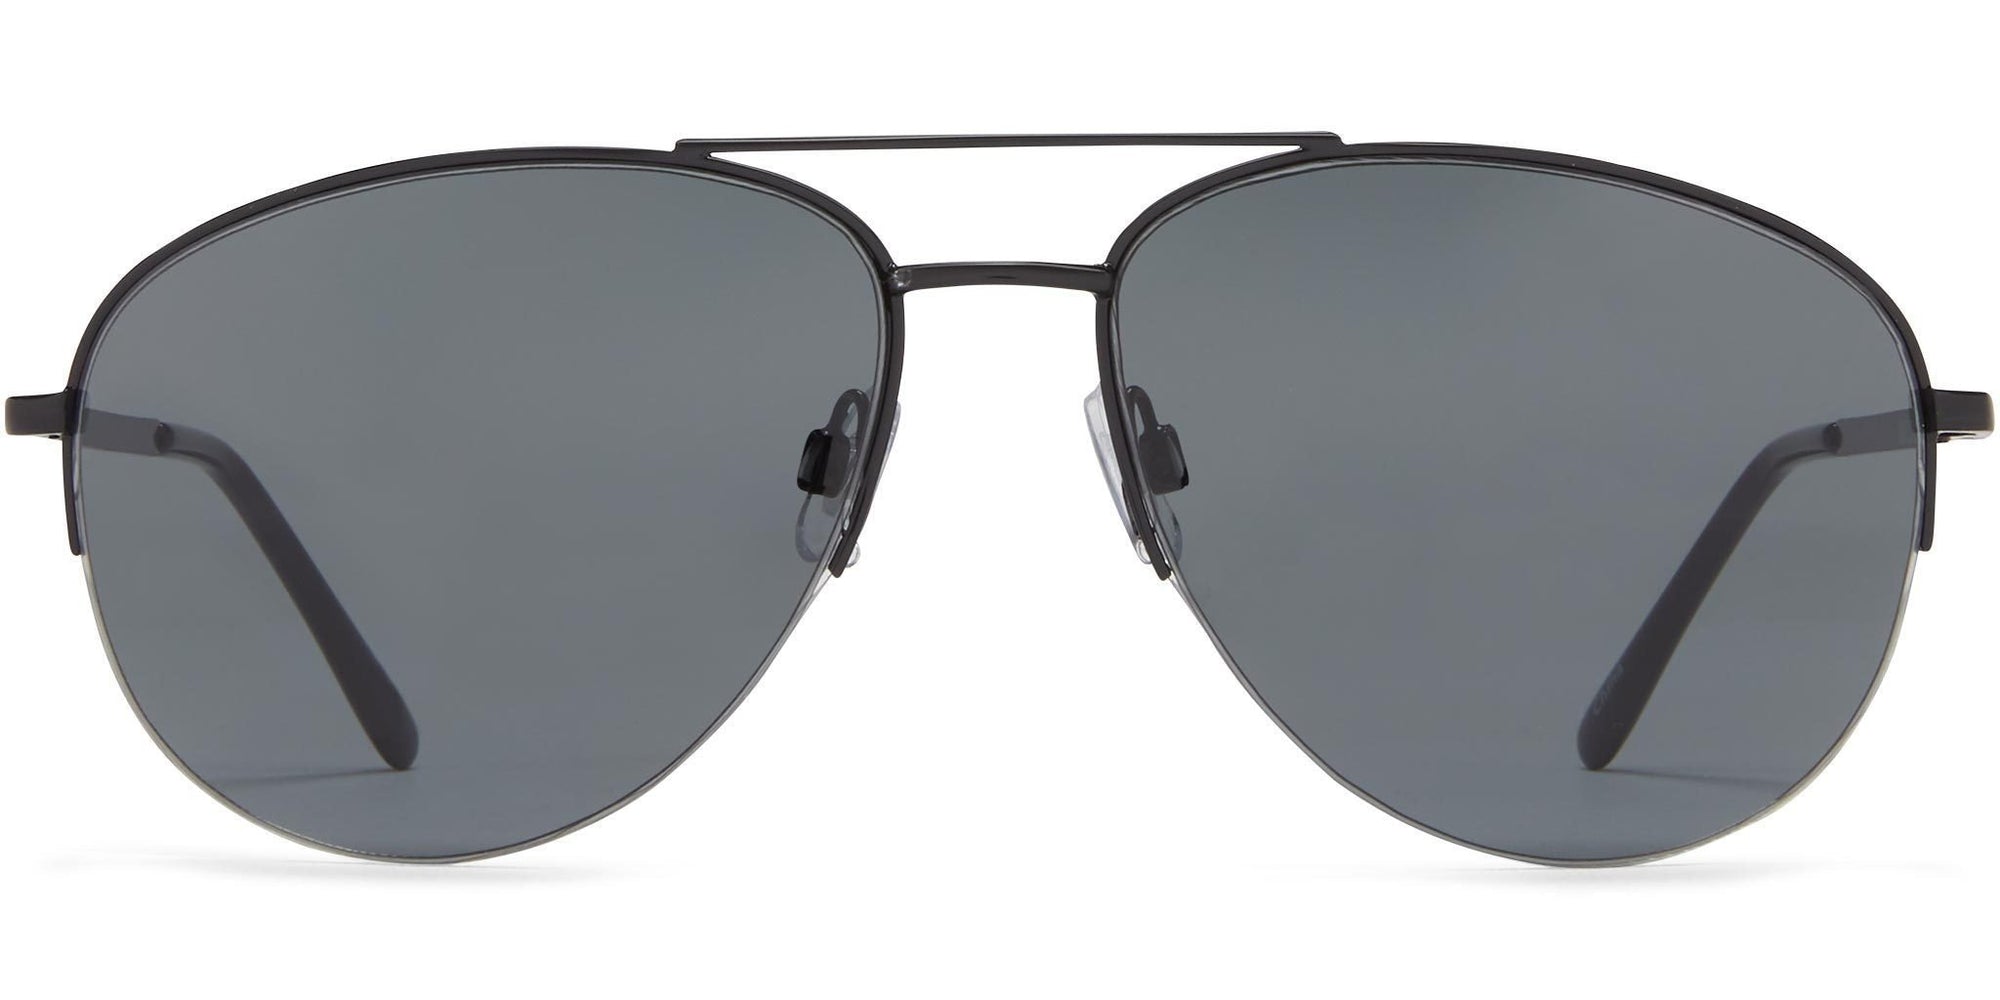 Puka - Black/Gray Lens - Sunglasses